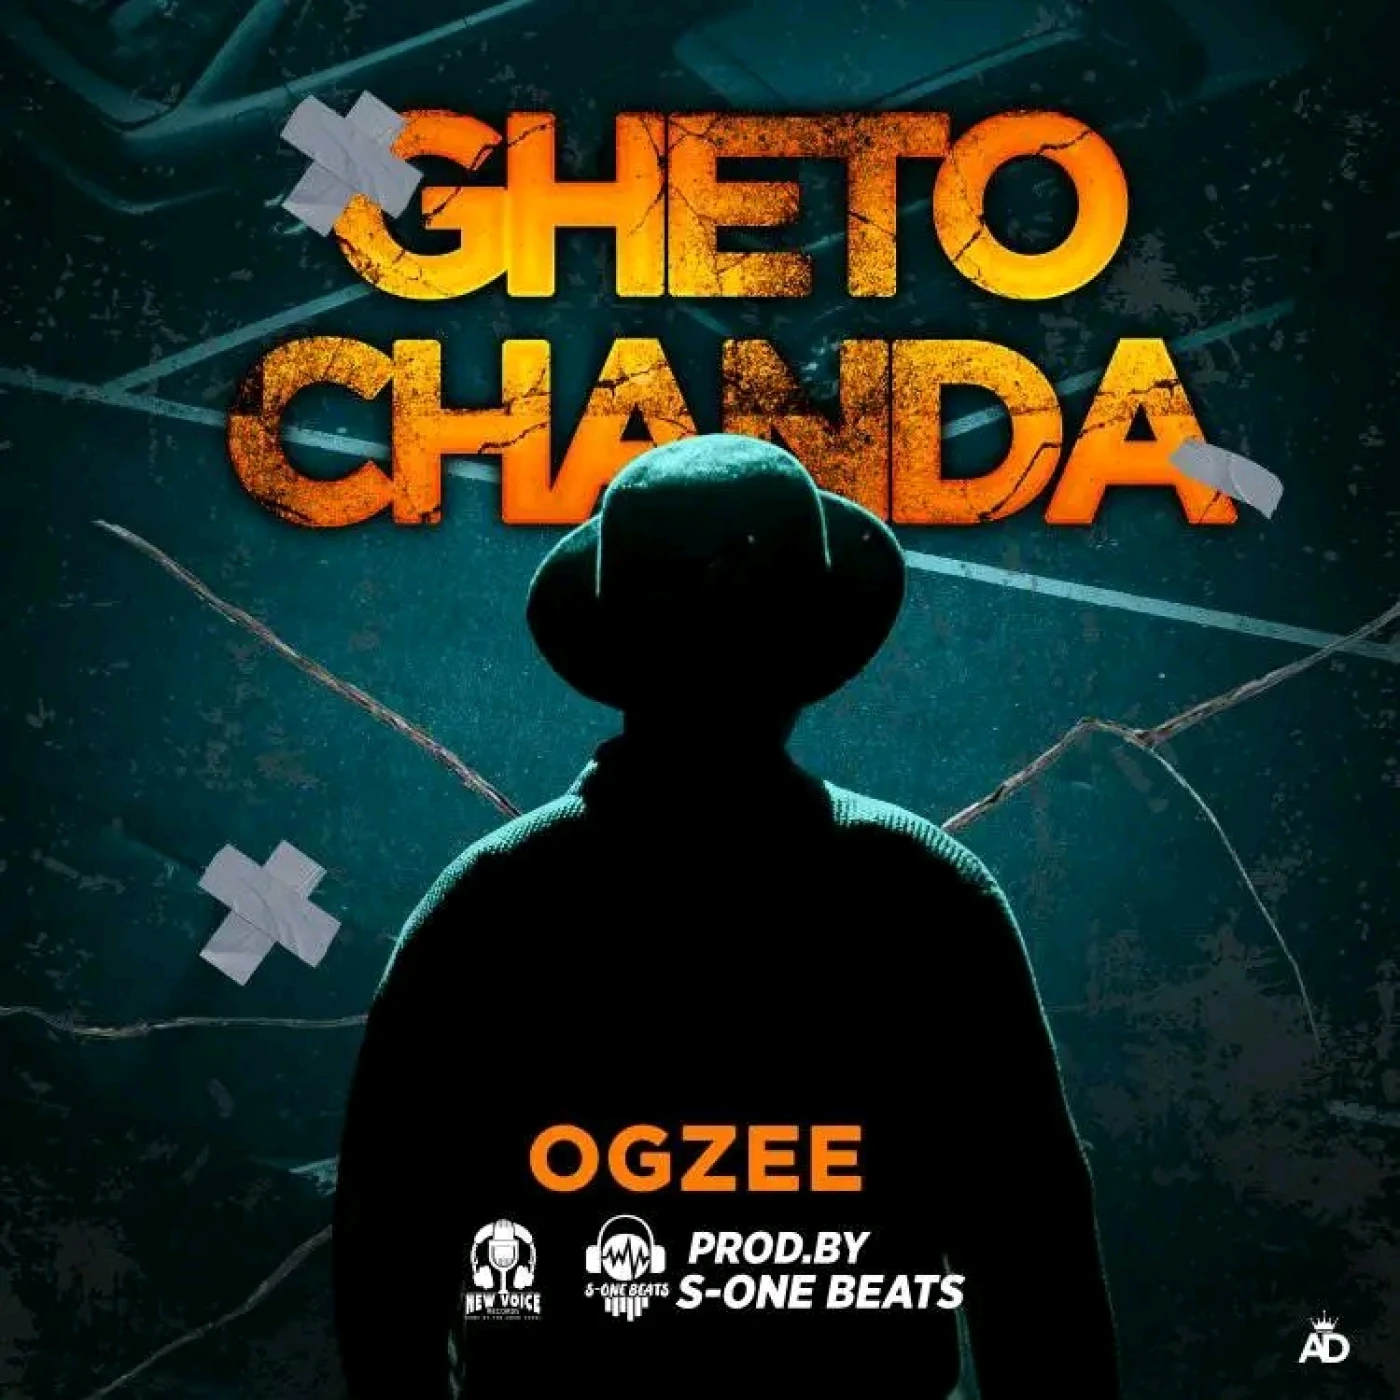 ogzee-ghetto-chanda-ogzee-just malawi